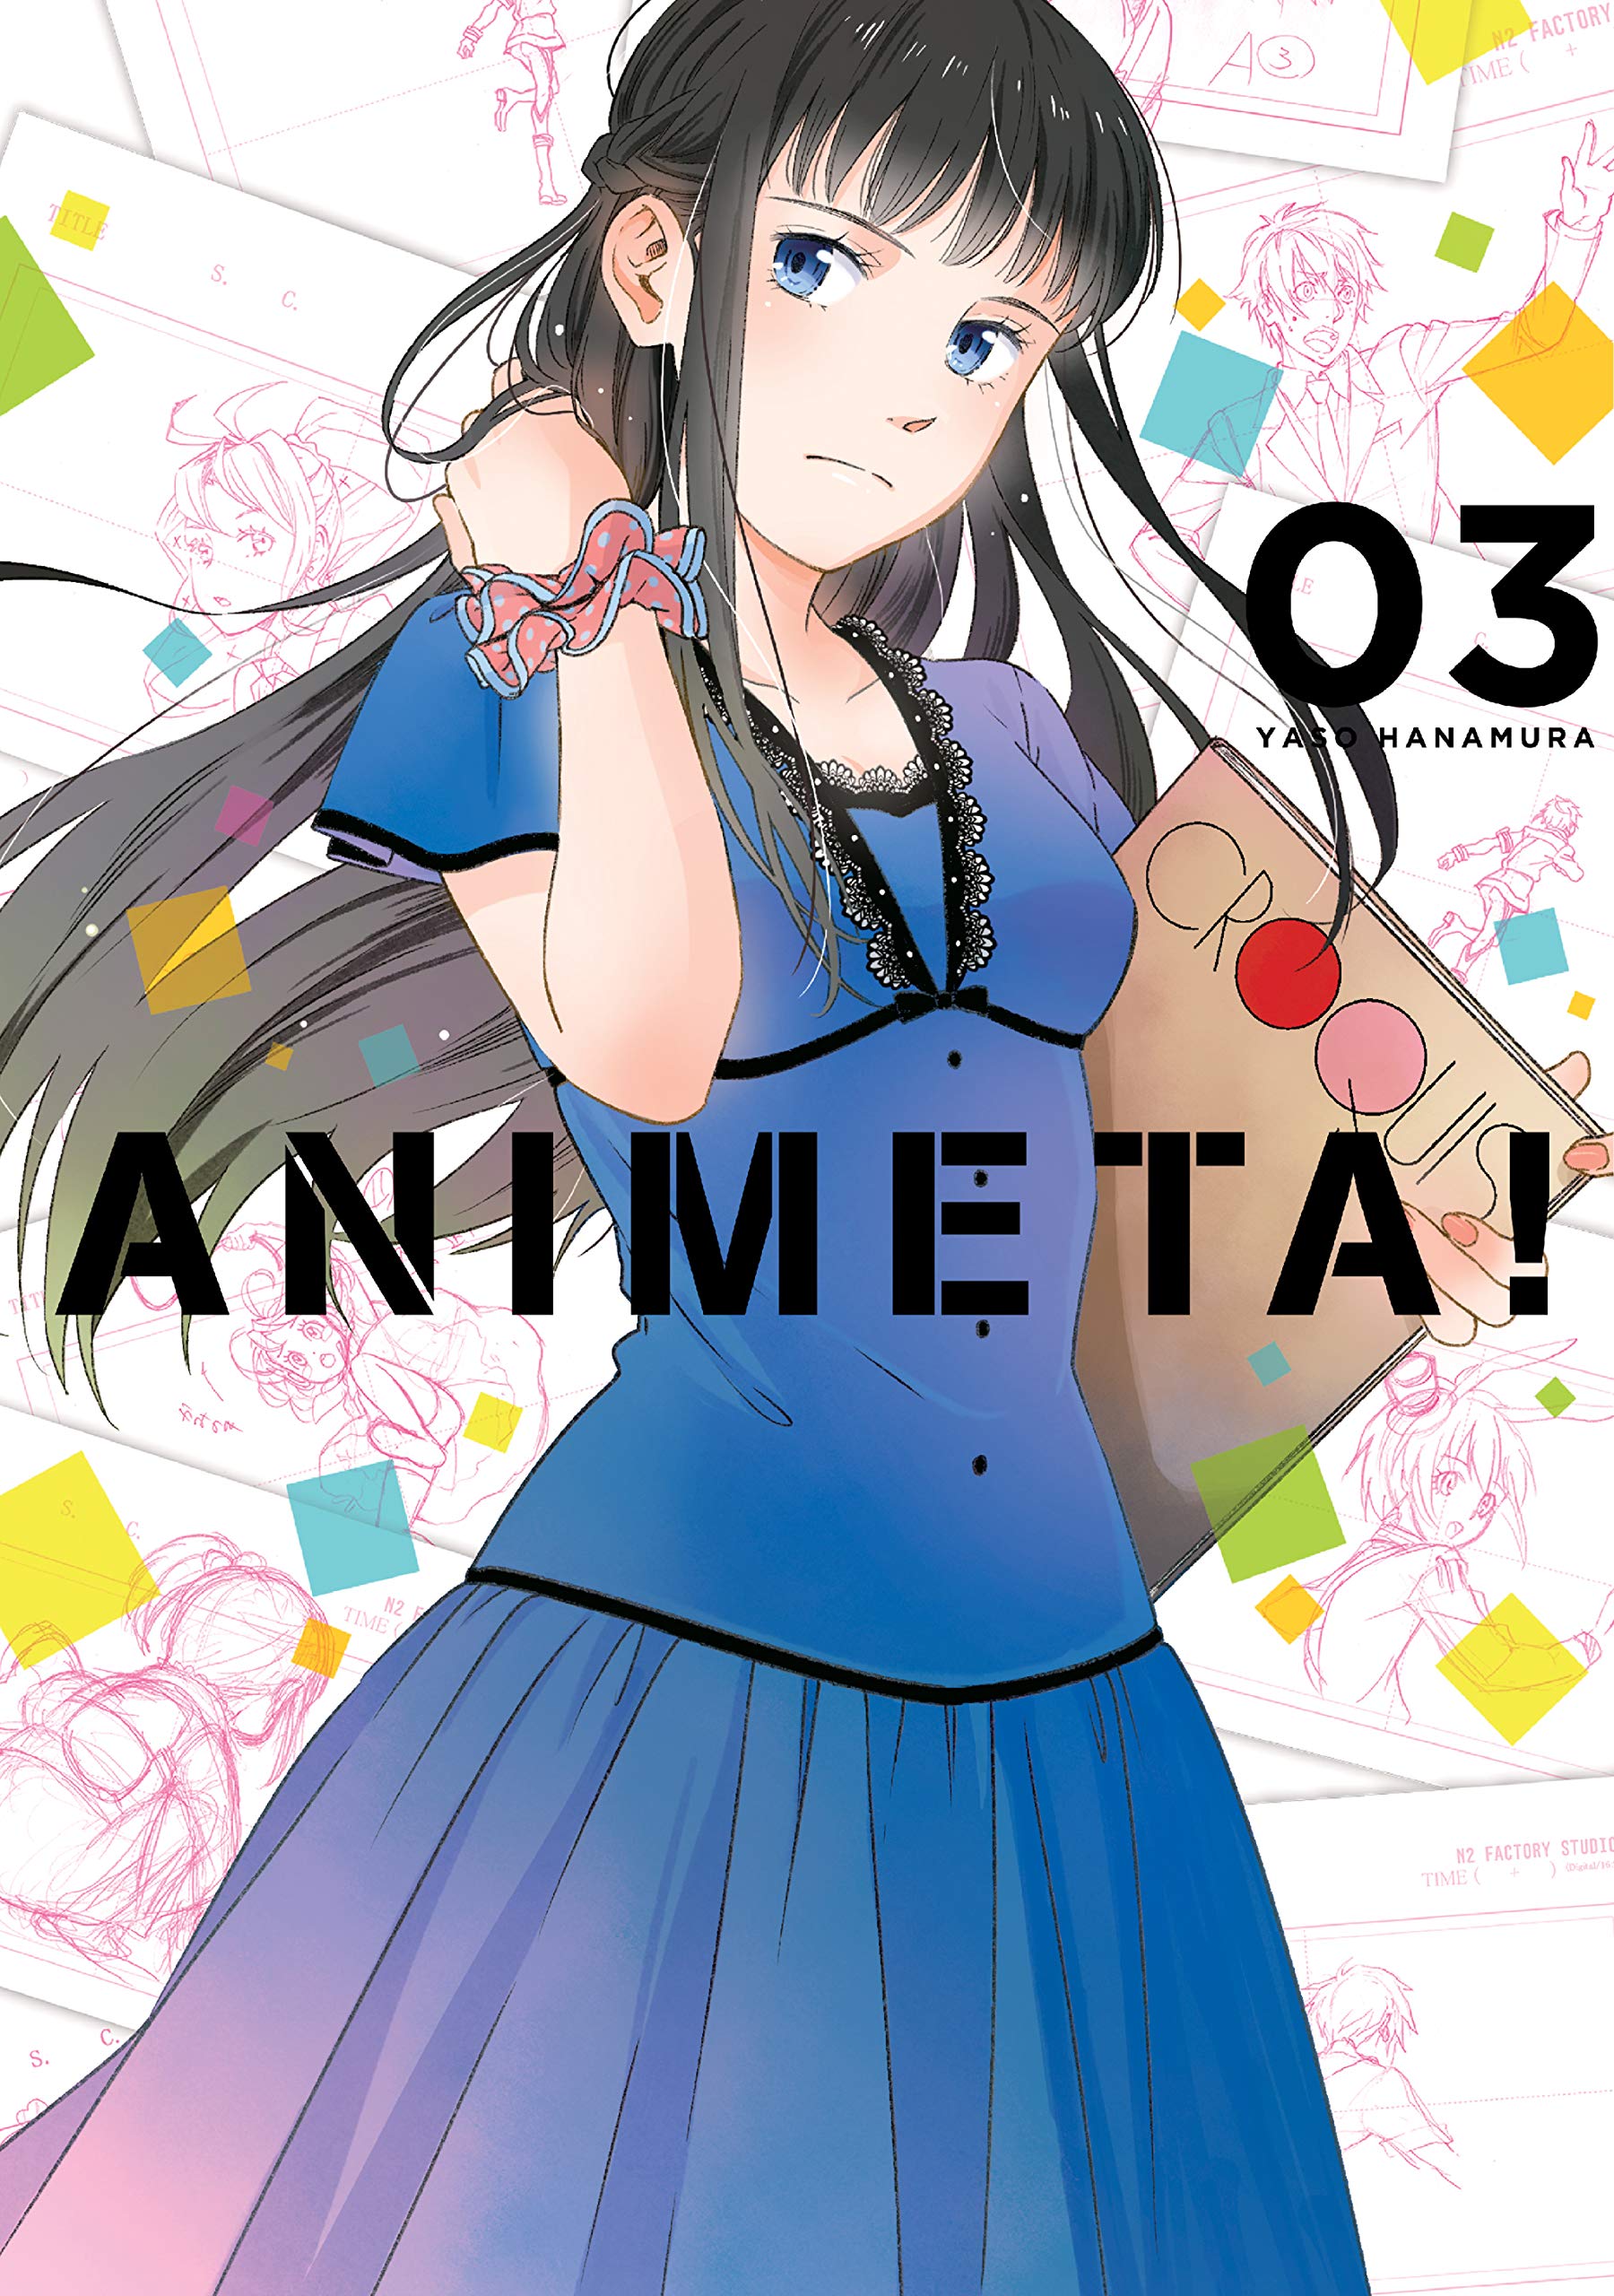 Animeta! Volume 3 | Yaso Hanamura